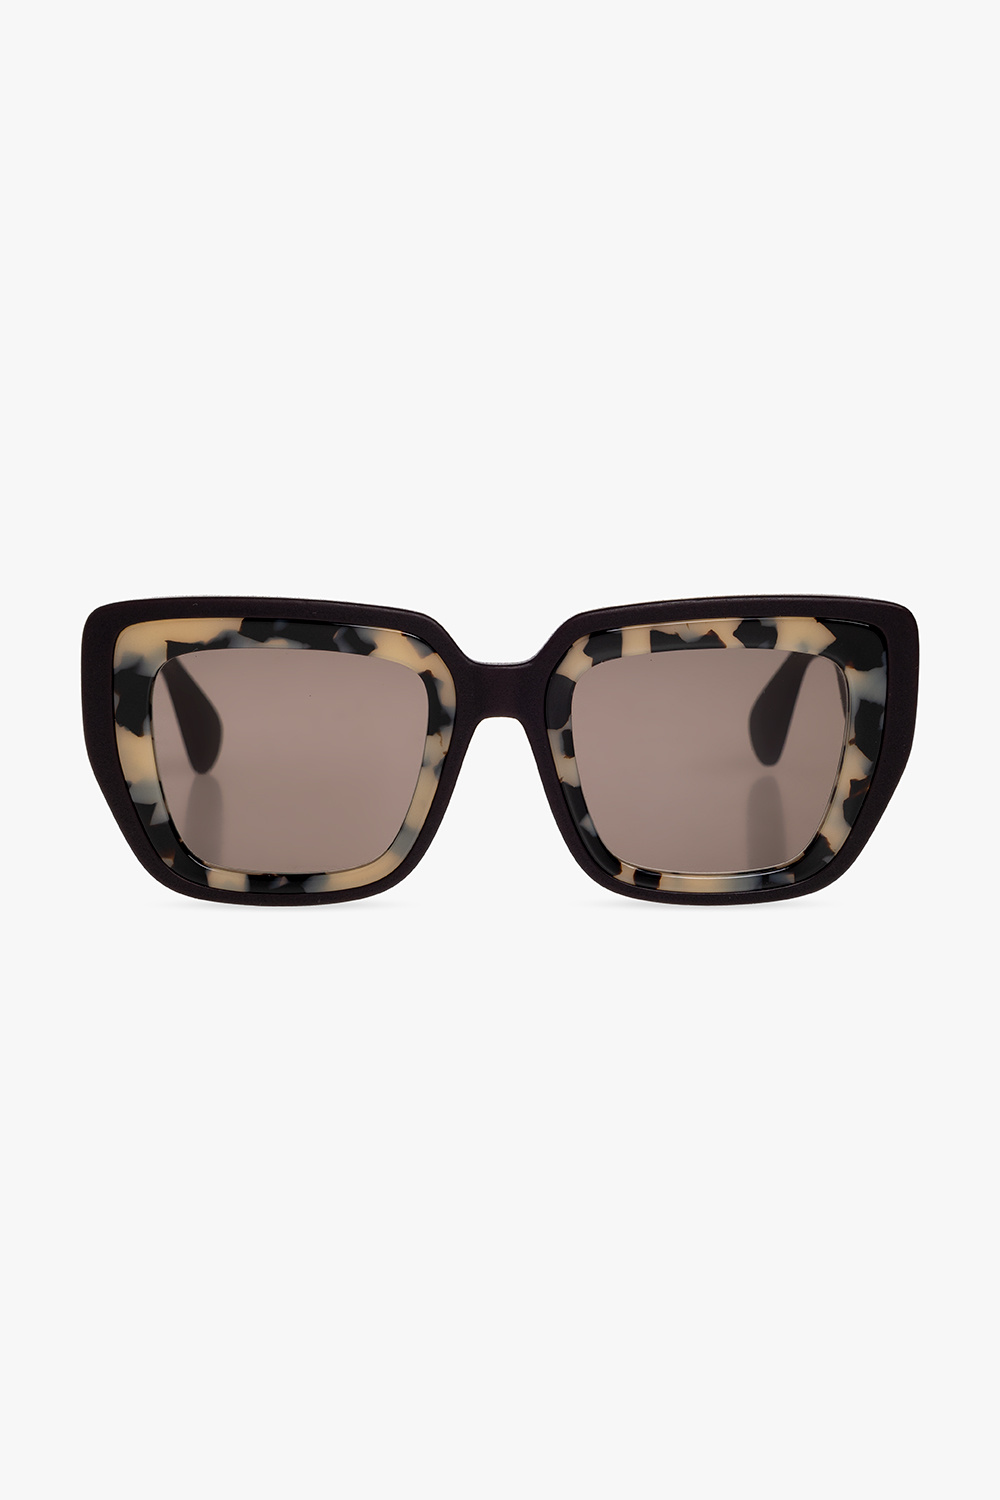 Mykita ‘Studio13’ sunglasses